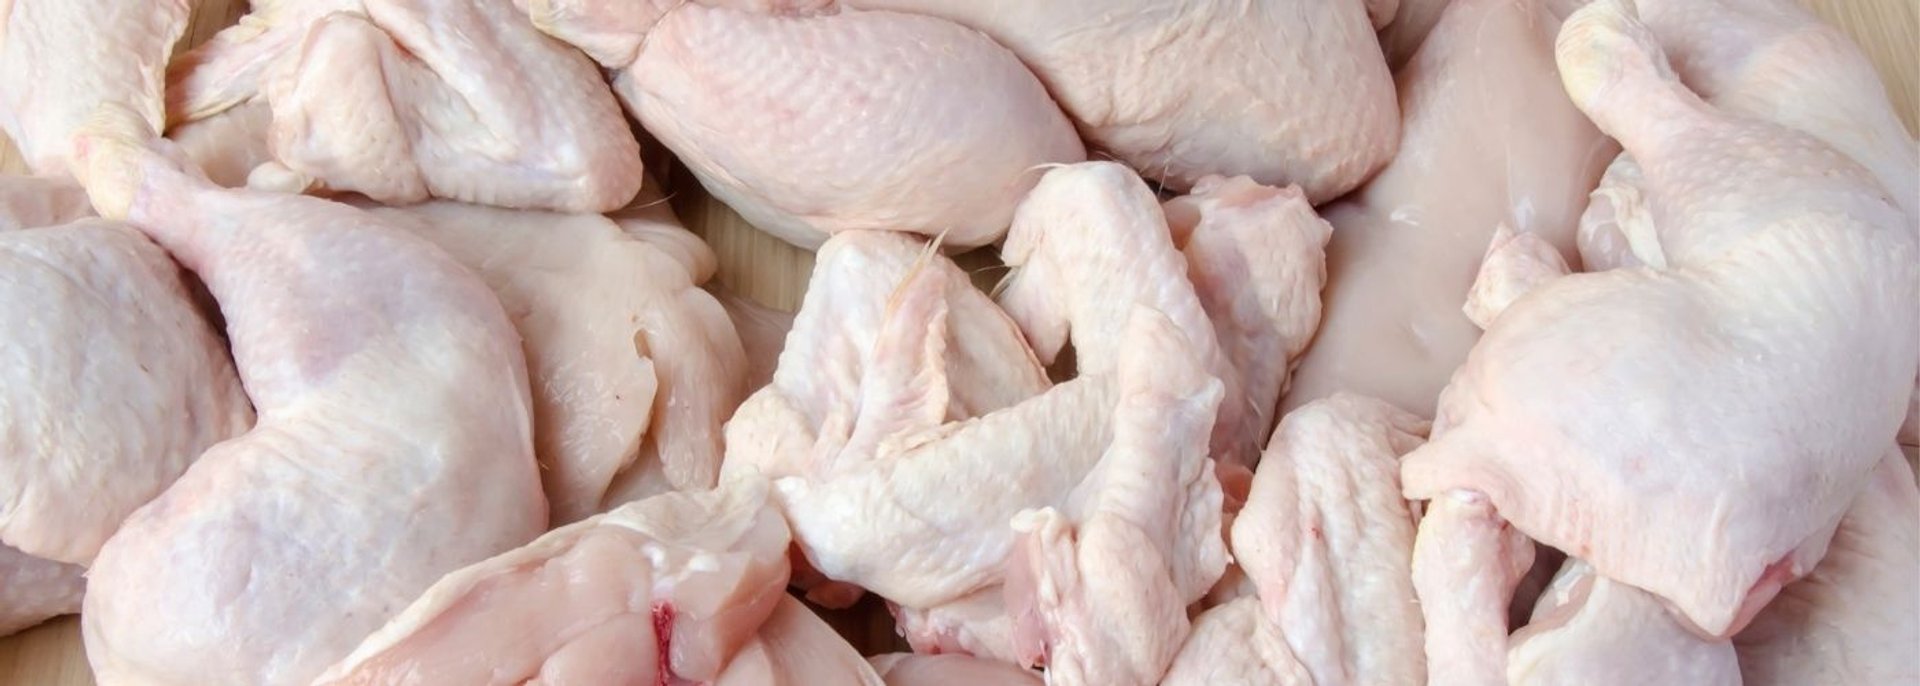 Kurczak zakażony salmonellą